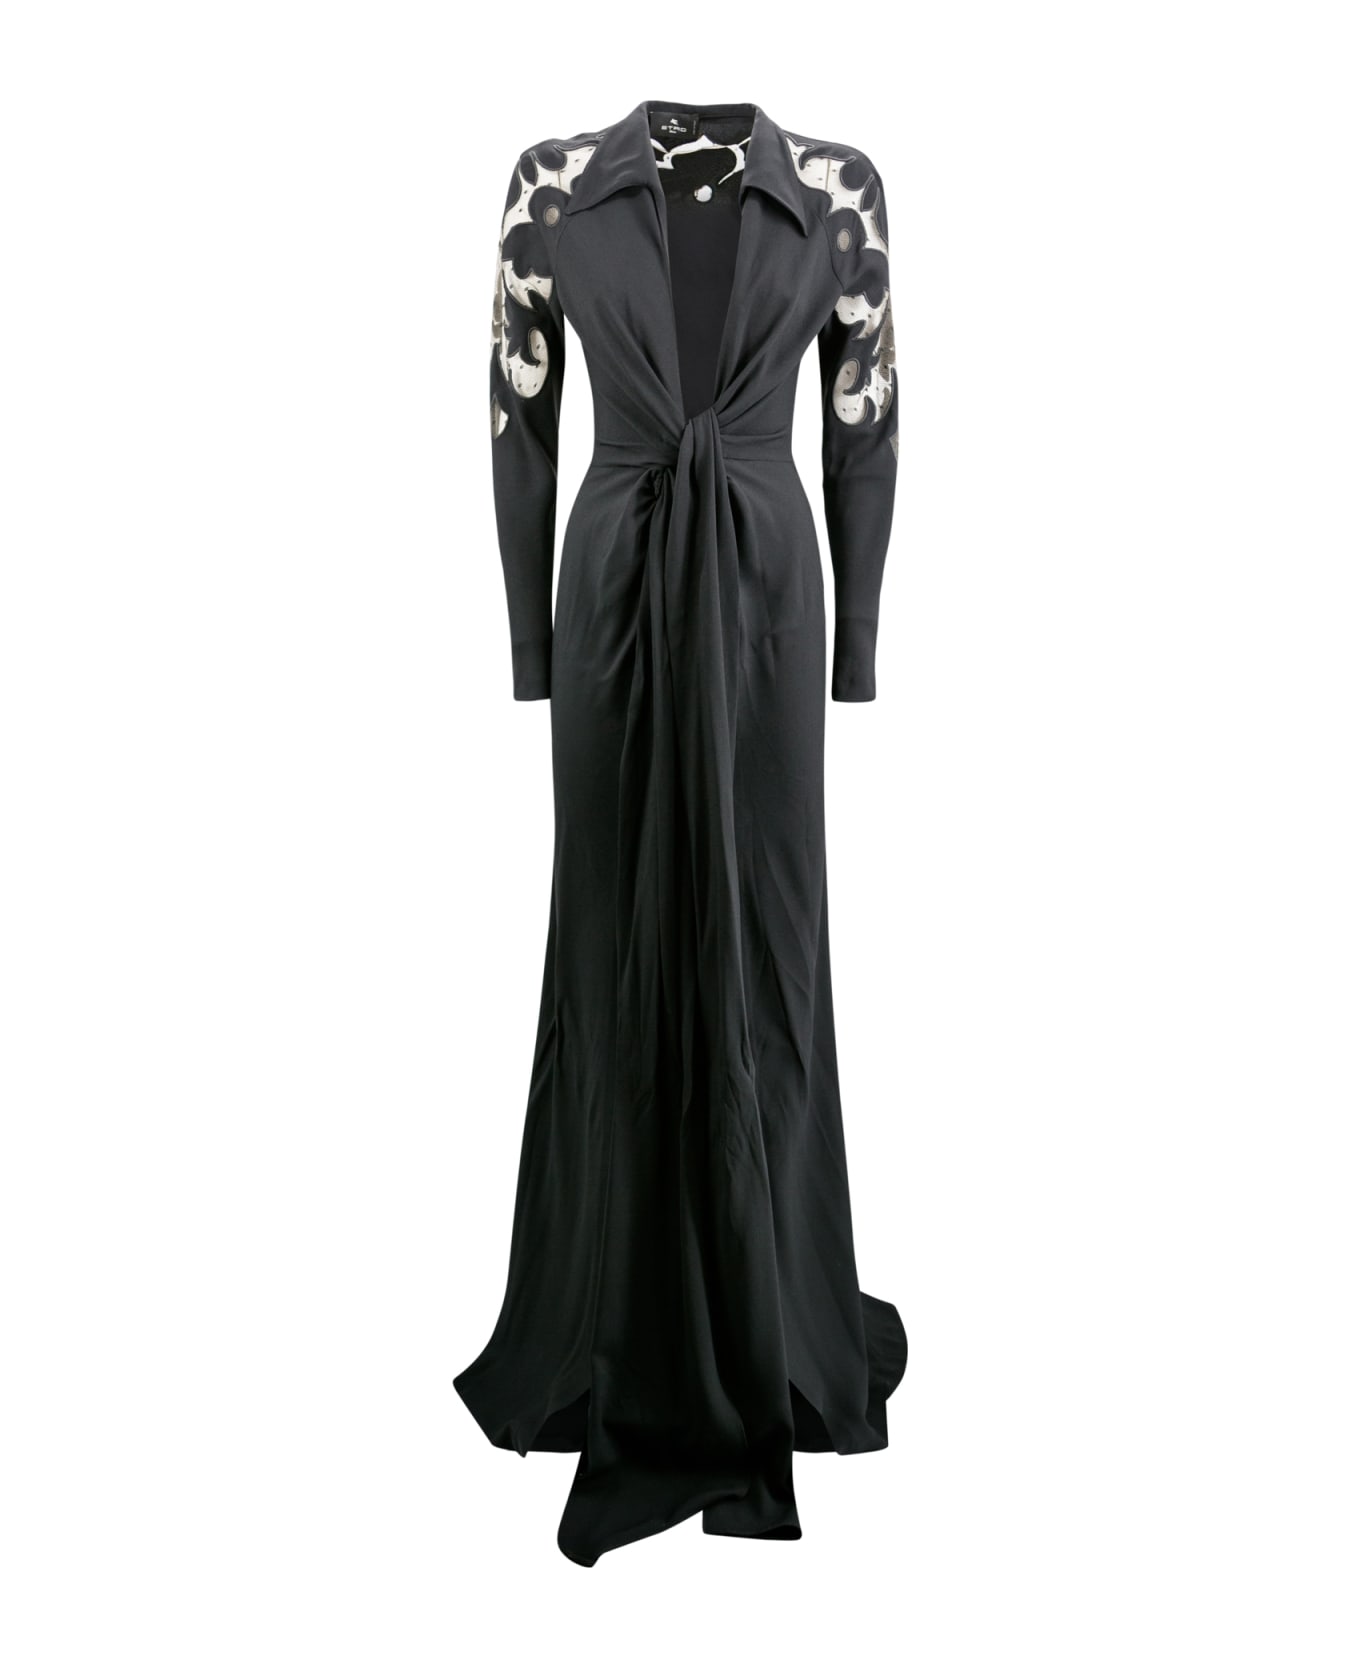 Etro Long Dress - Black